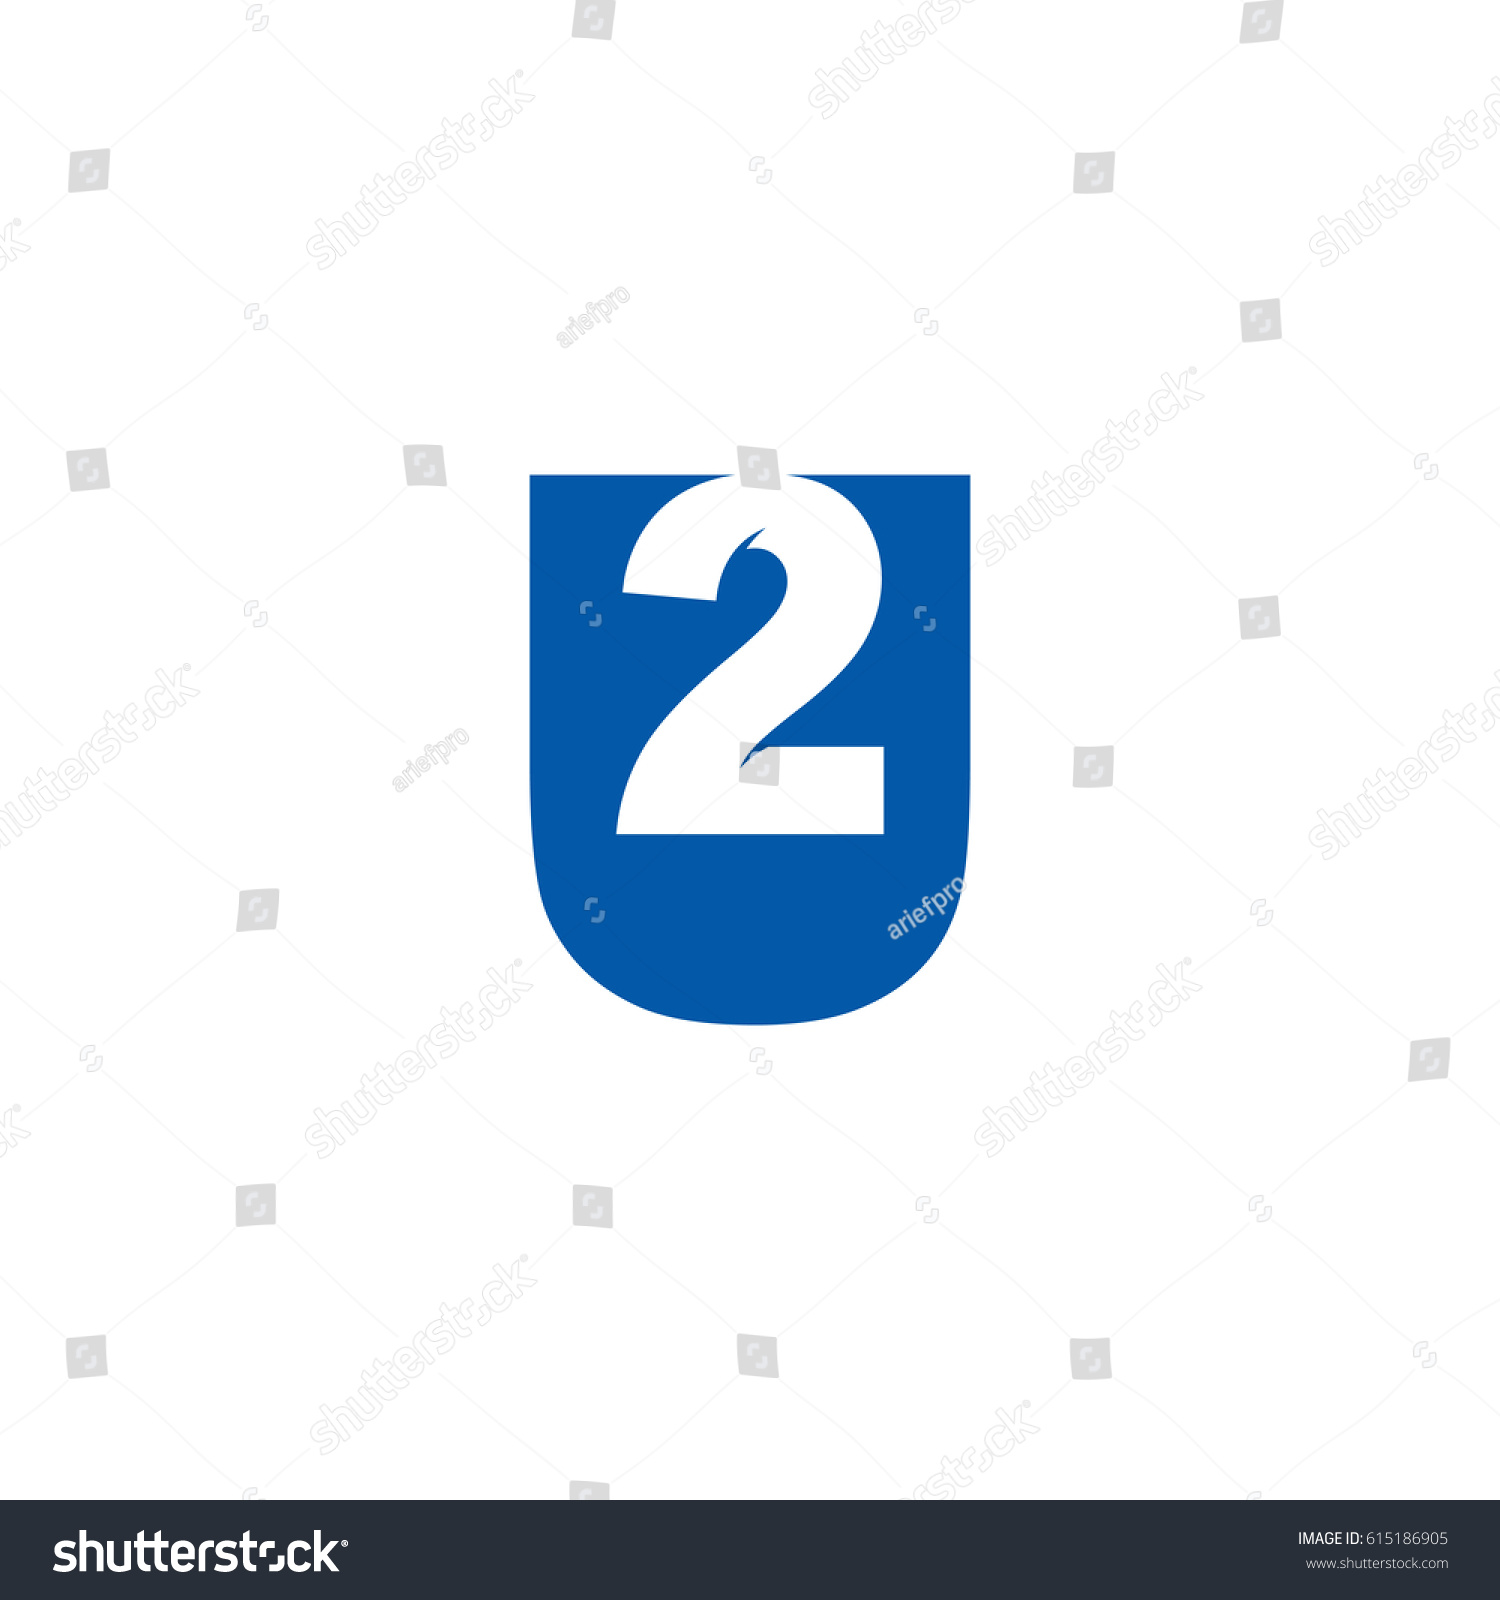 SVG of Initial letter and number logo, U and 2, 2U, U2, negative space blue svg